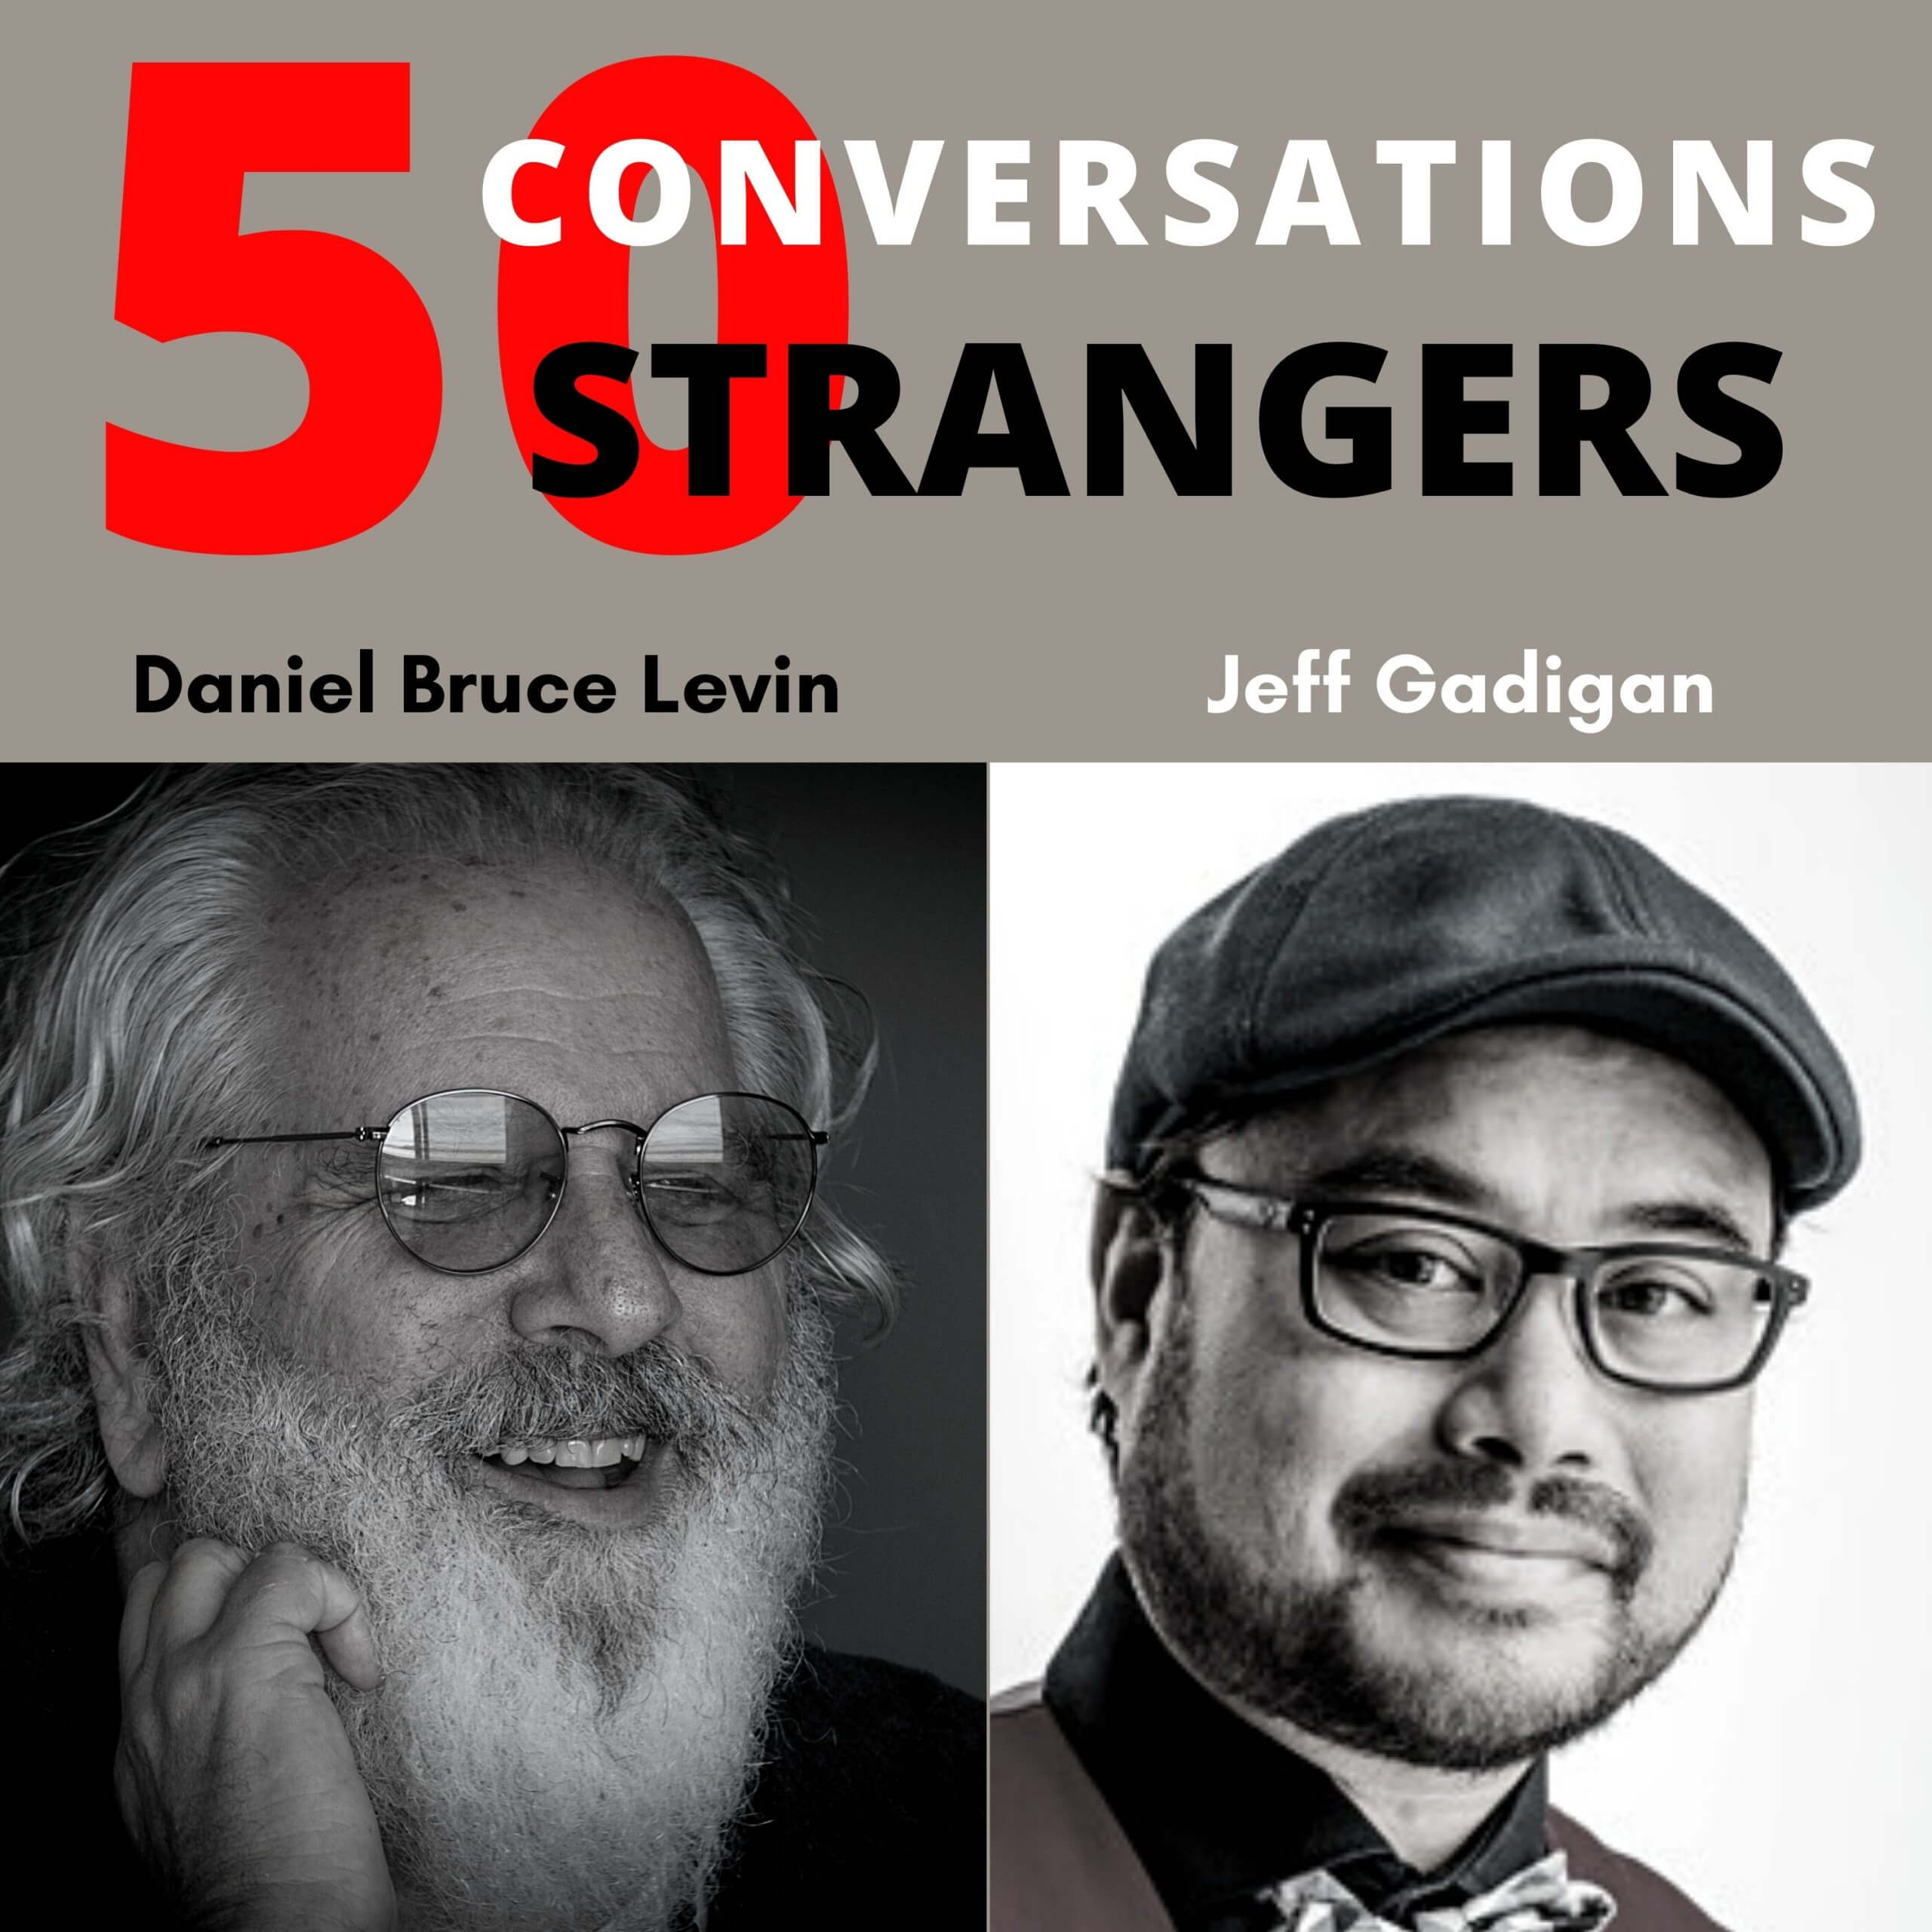 50 Conversations with 50 Strangers with Jeff Gadigan